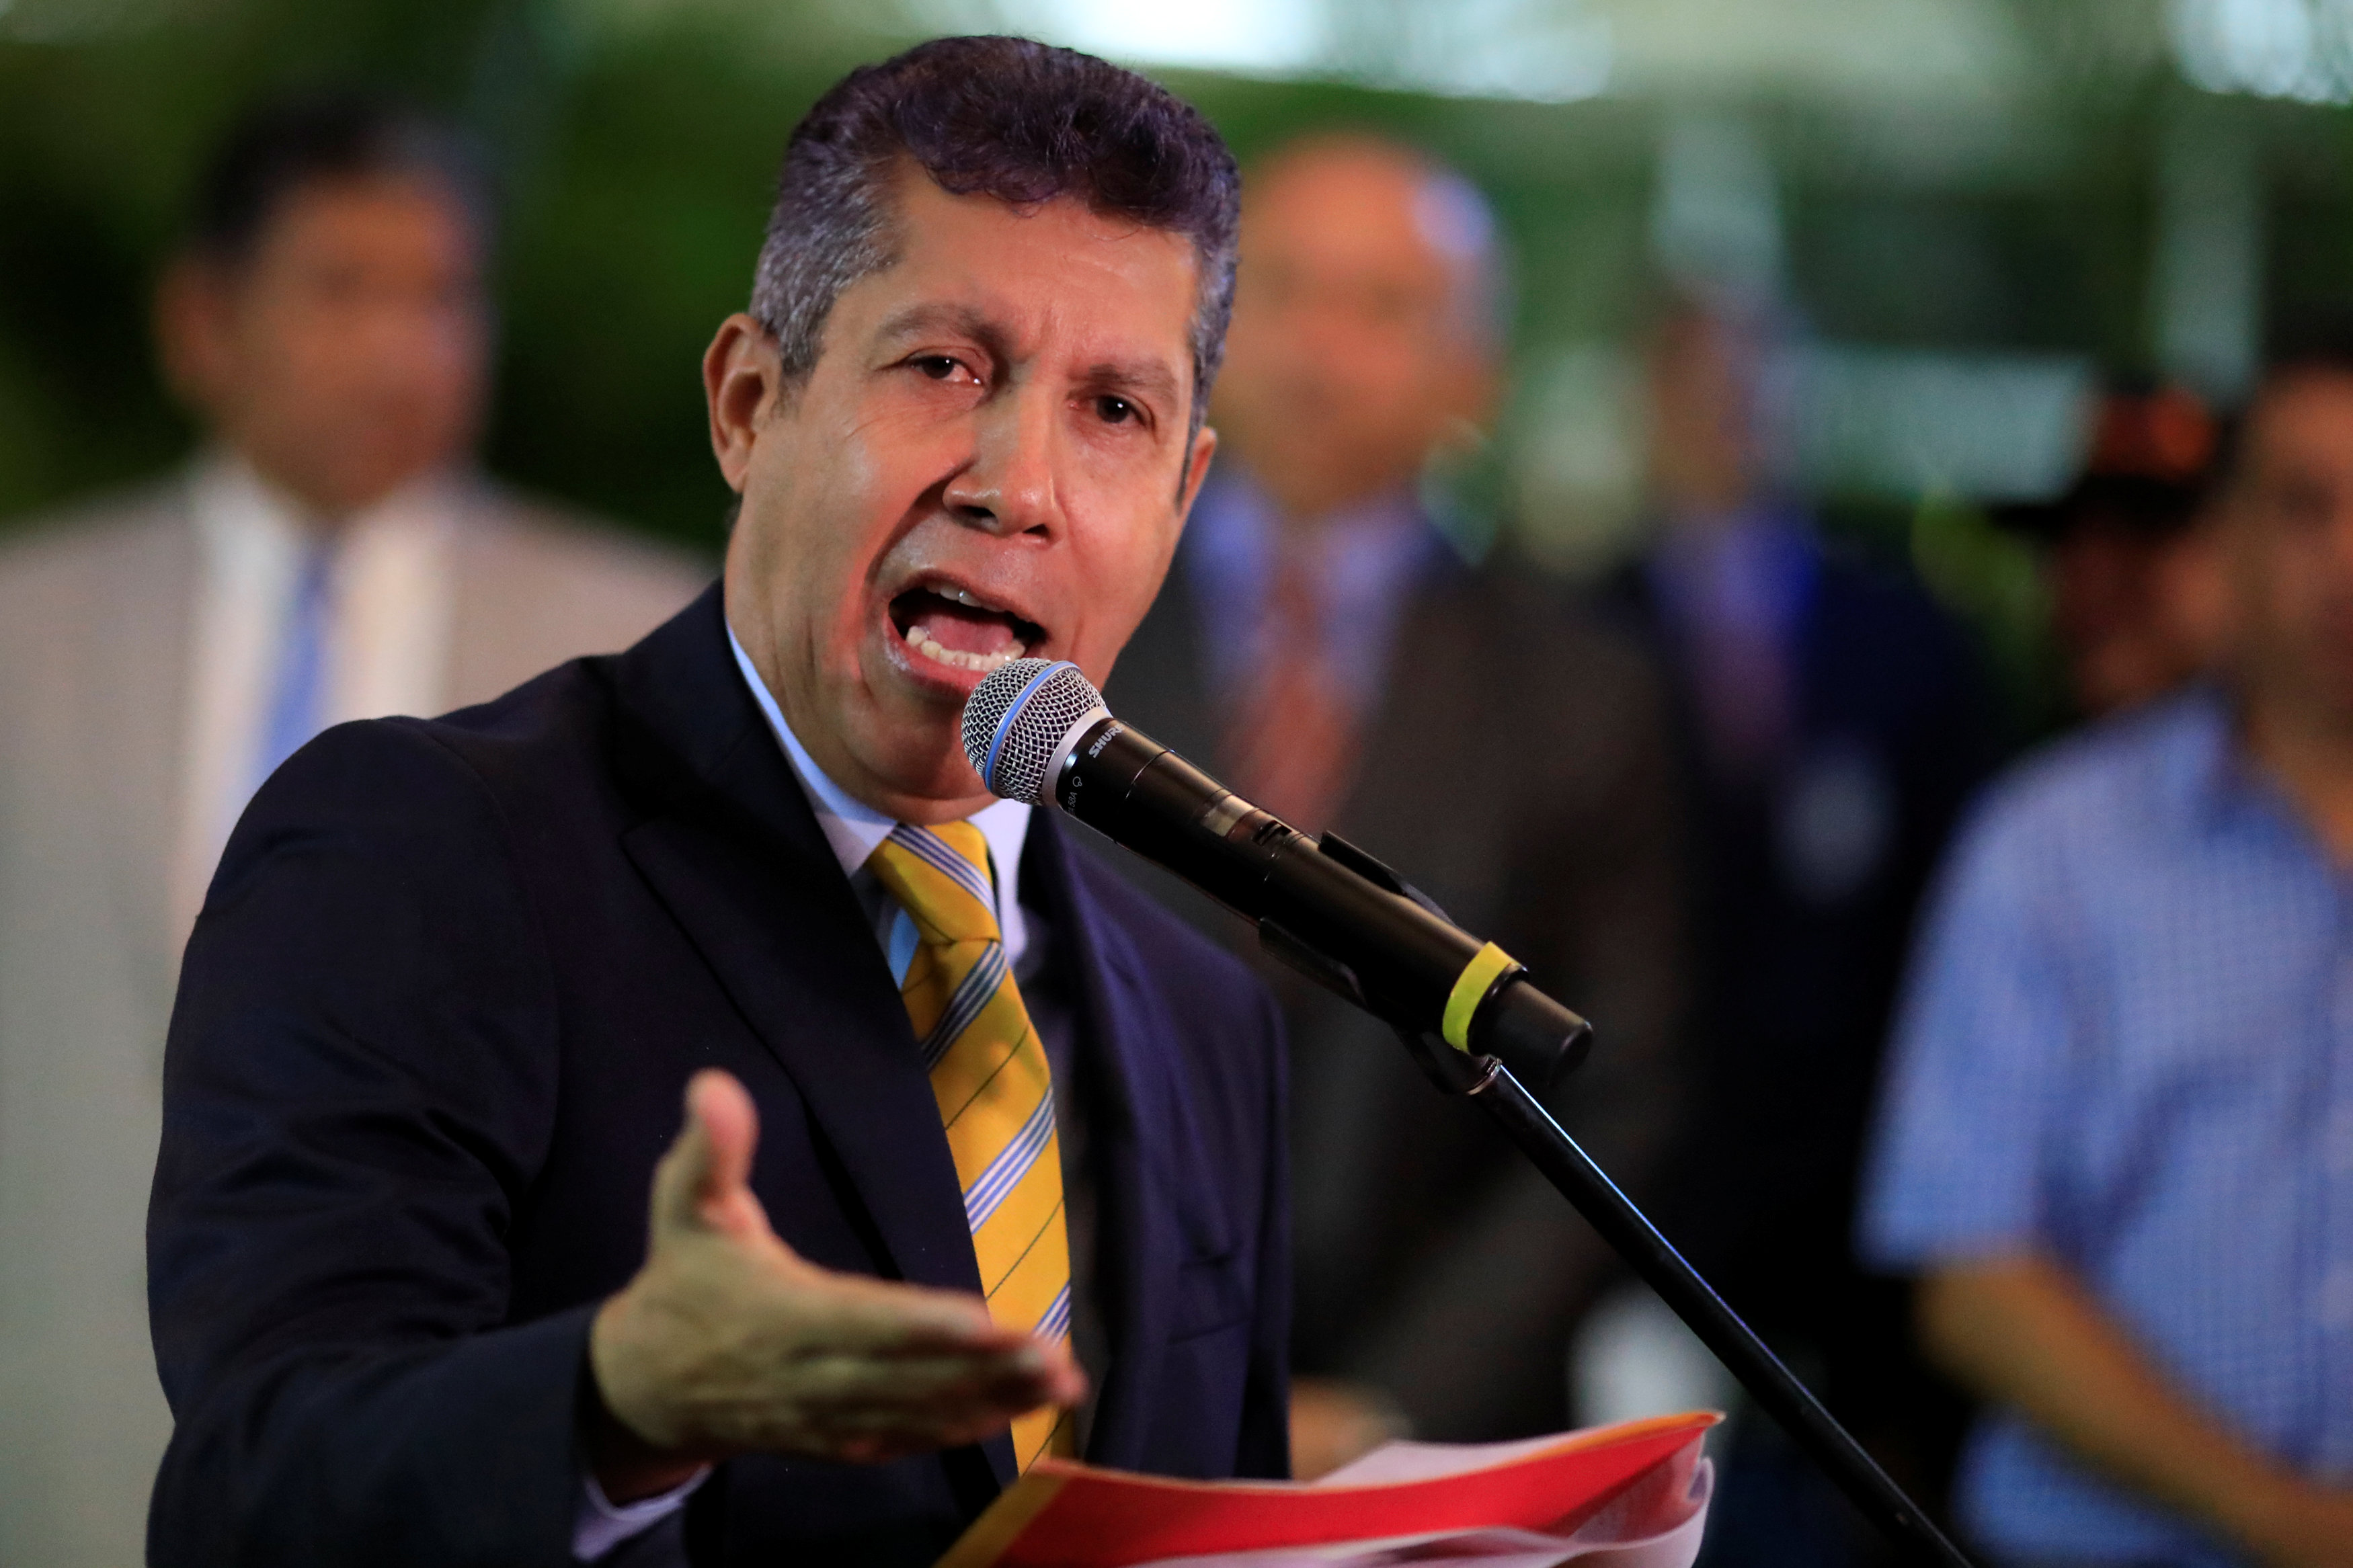 “Vamos a ganar, estamos seguros”: Henri Falcón tras inscribirse como contrincante electoral de Maduro